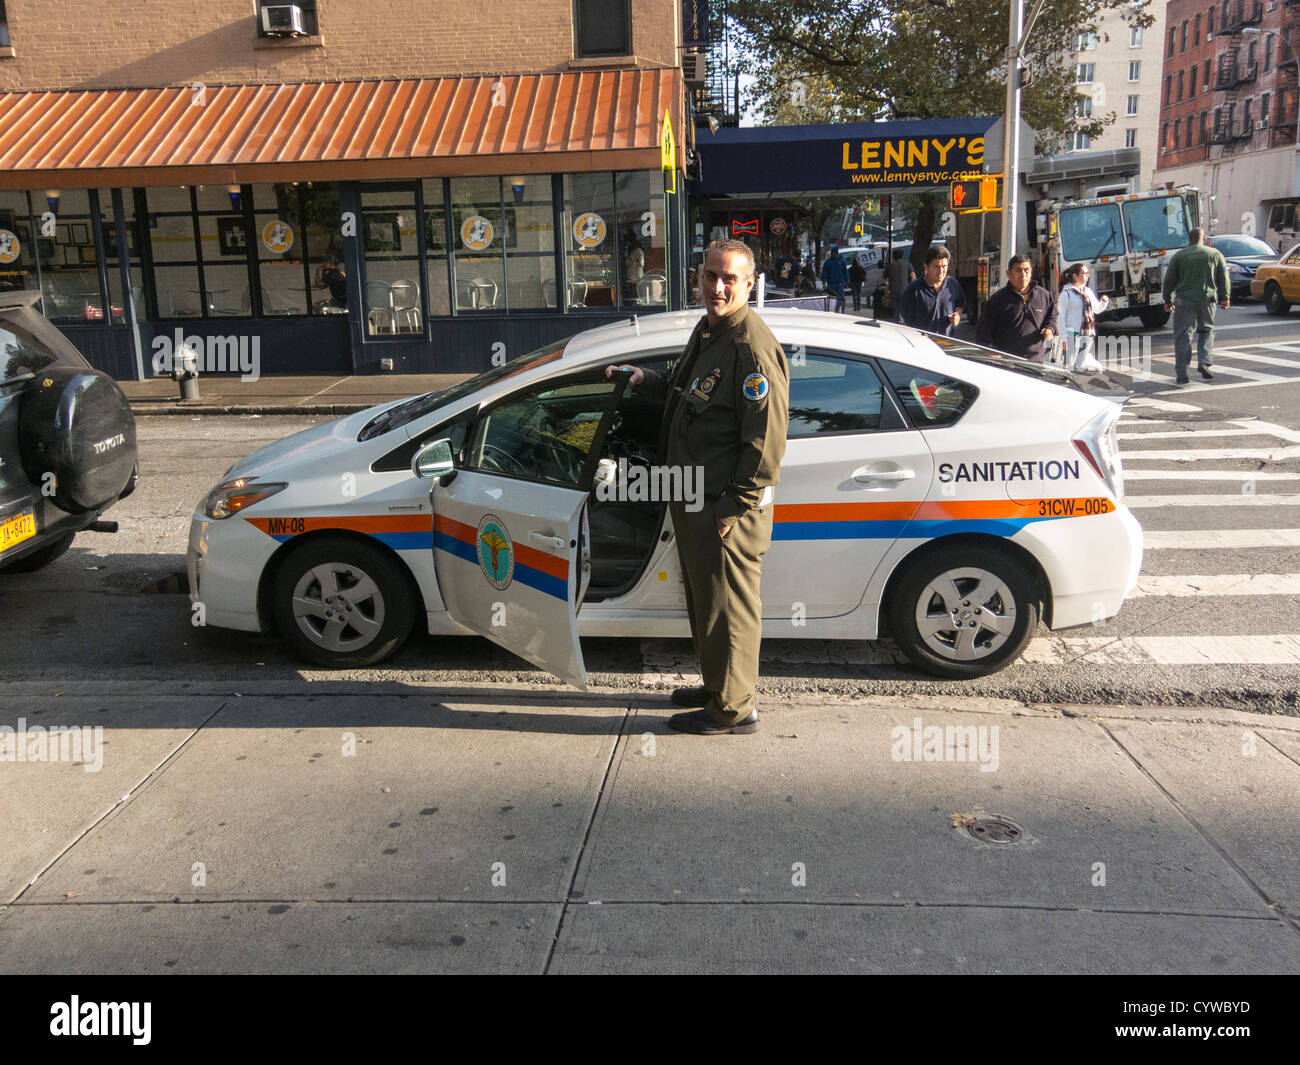 Sanitation officer, City of New York Department of Sanitation car, Upper East side, Manhattan, New York City, USA Stock Photo